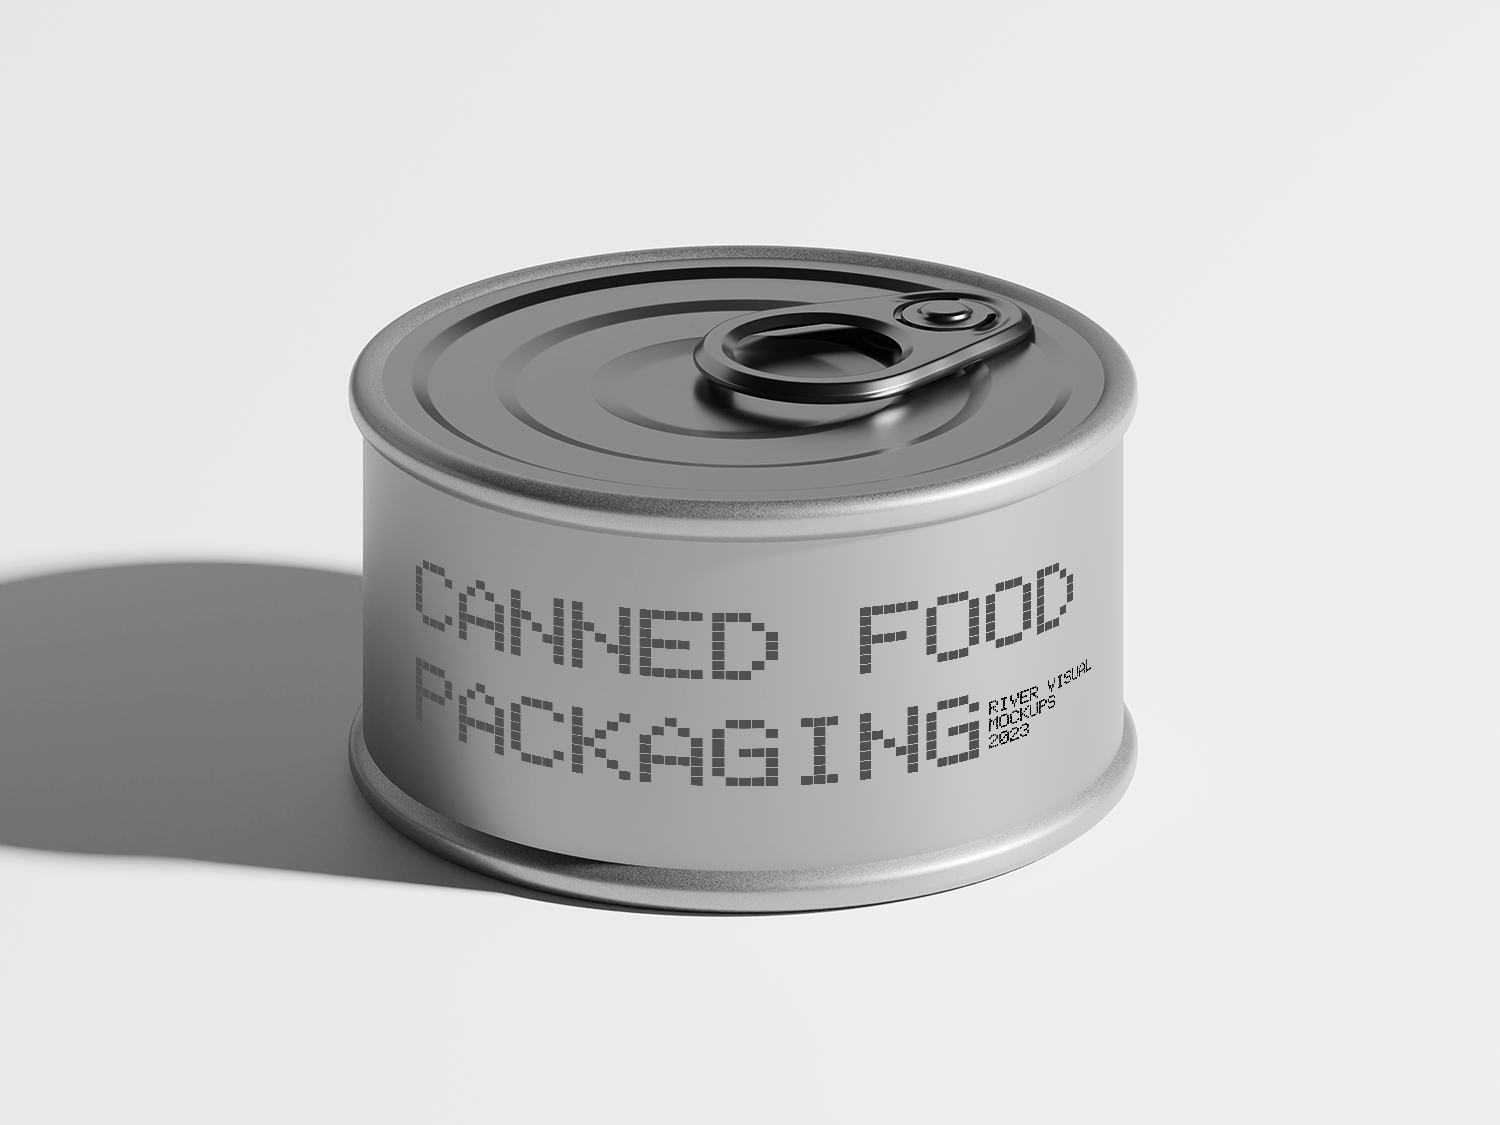 Canned Food Packaging Free Mockup